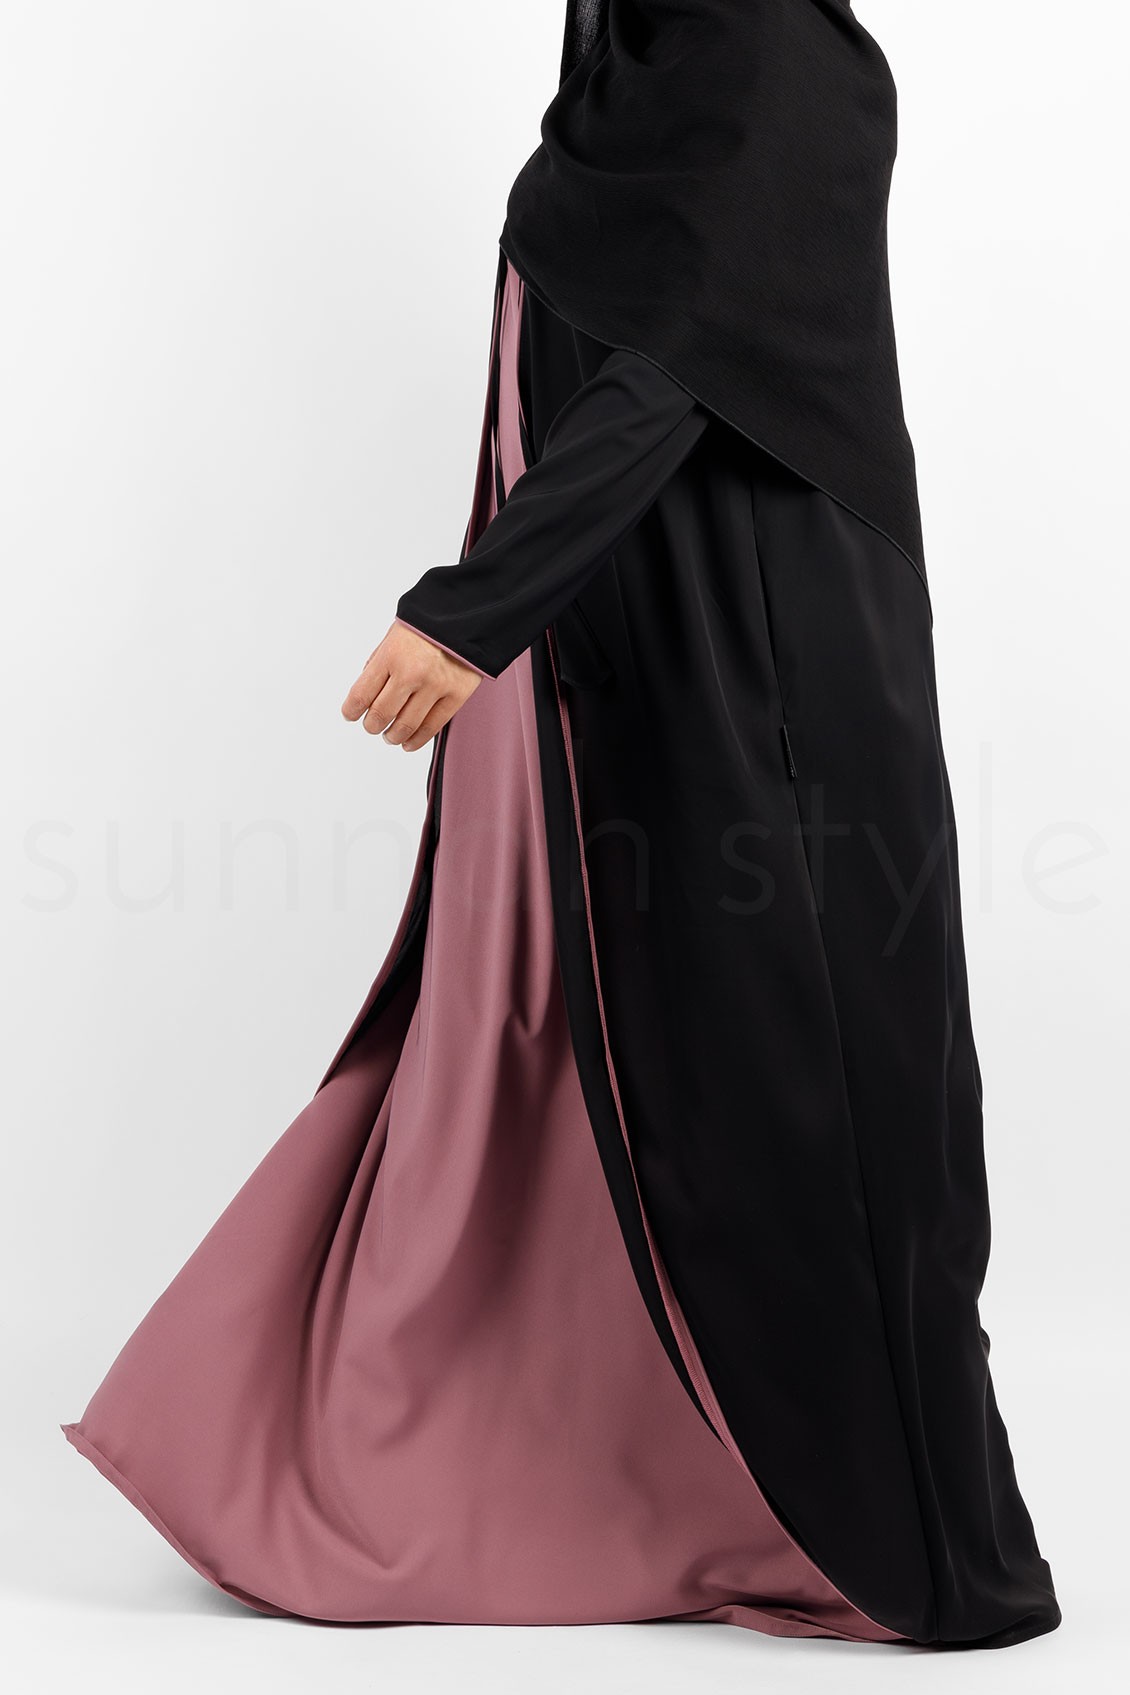 Sunnah Style Bloom Two Tone Abaya Black Rosewood